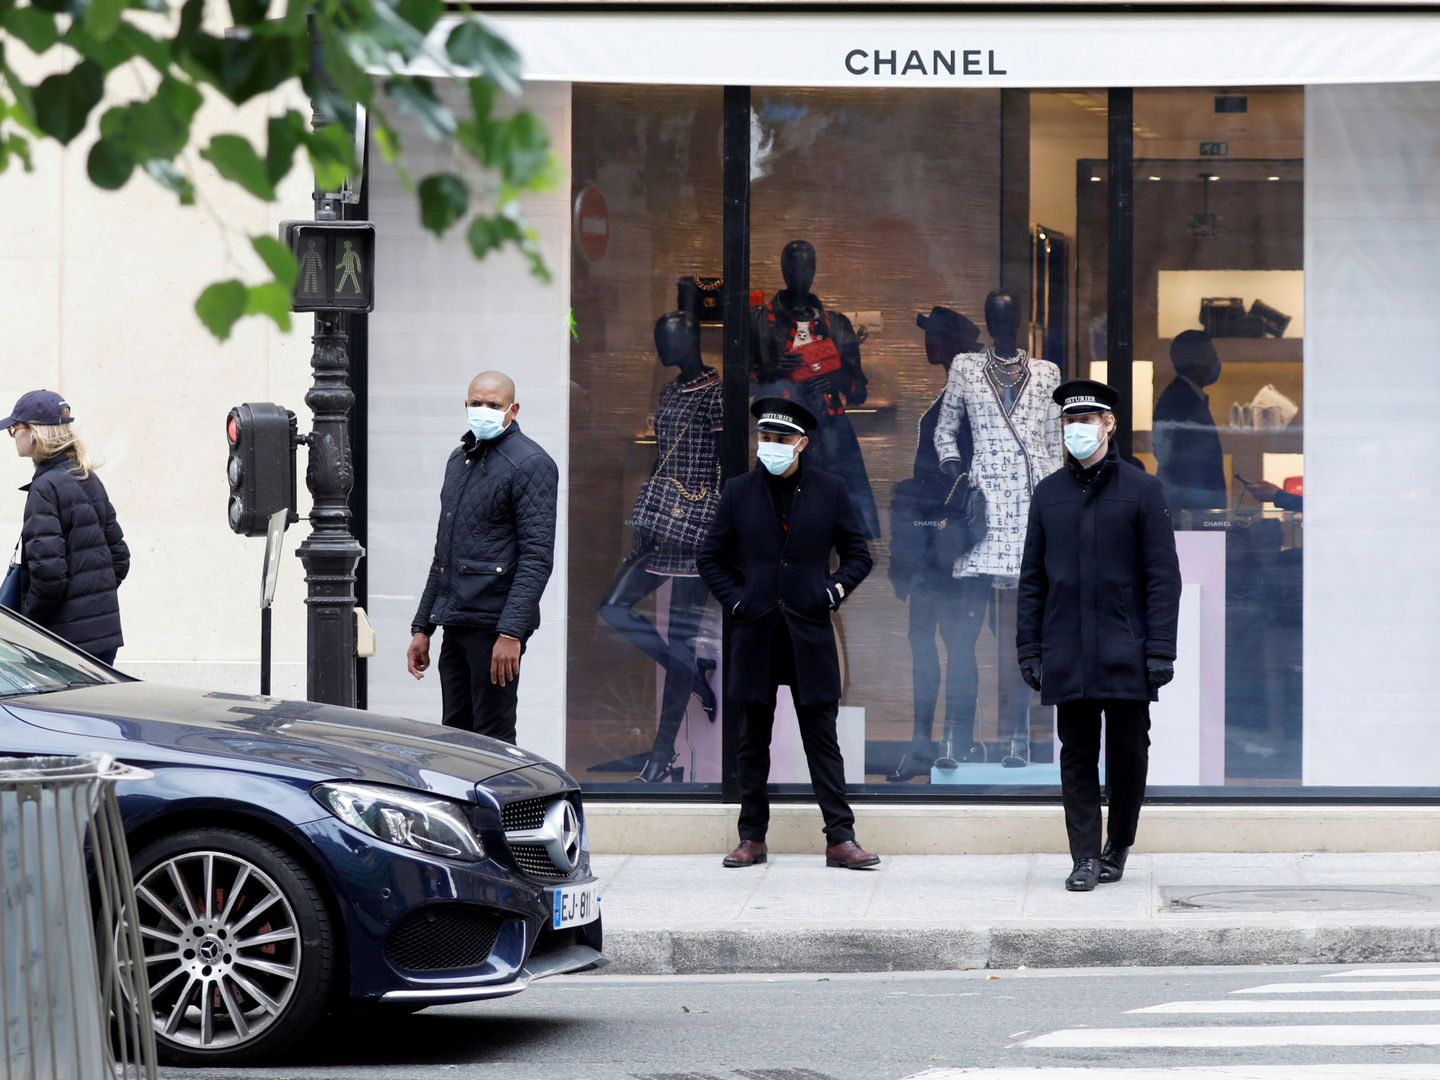 Chanel. (Reuters)